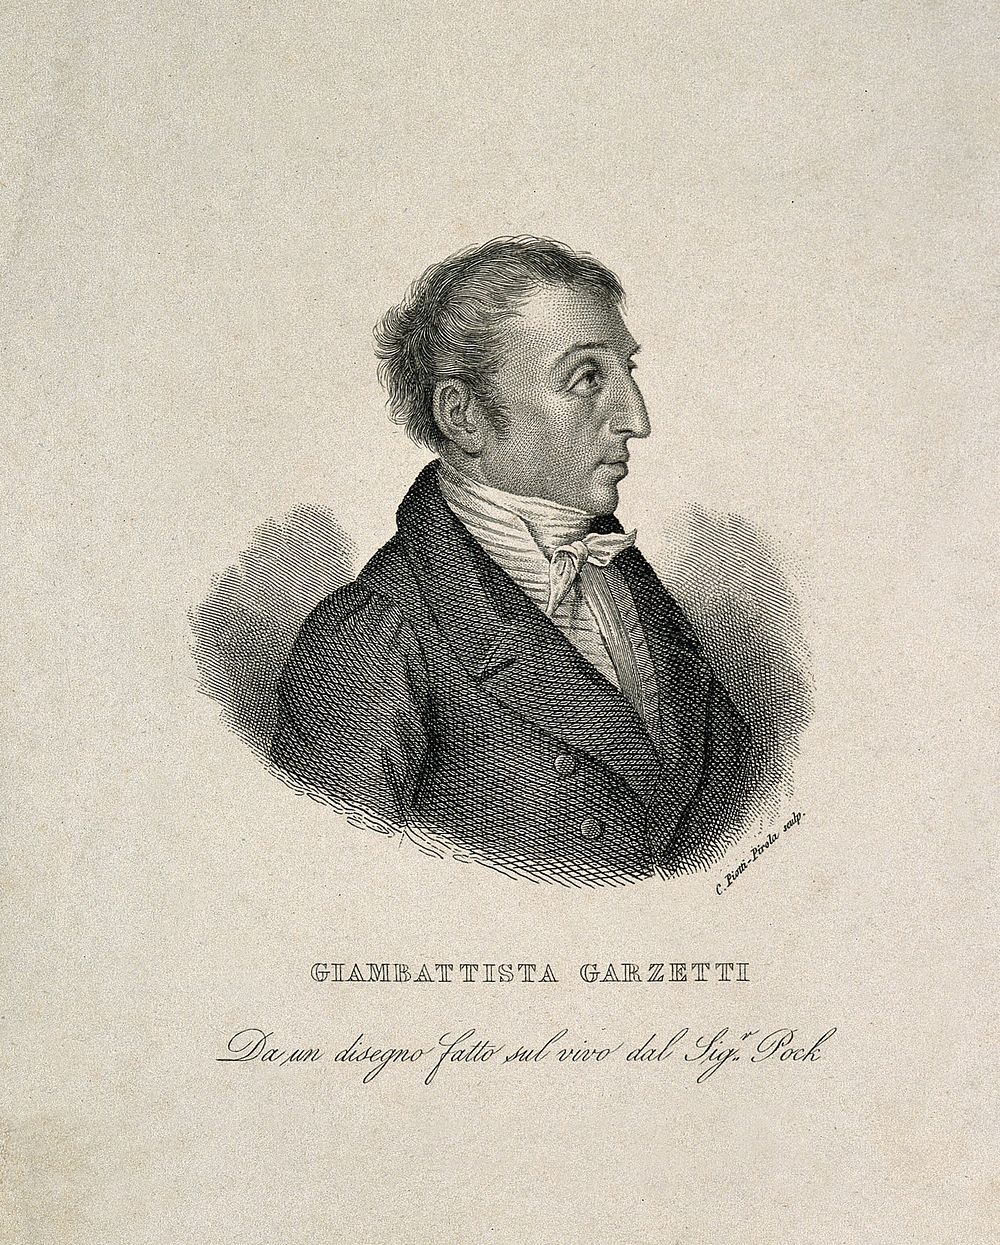 Giambattista Garzetti. Line engraving by Caterina Piotti-Pirola after Pock.